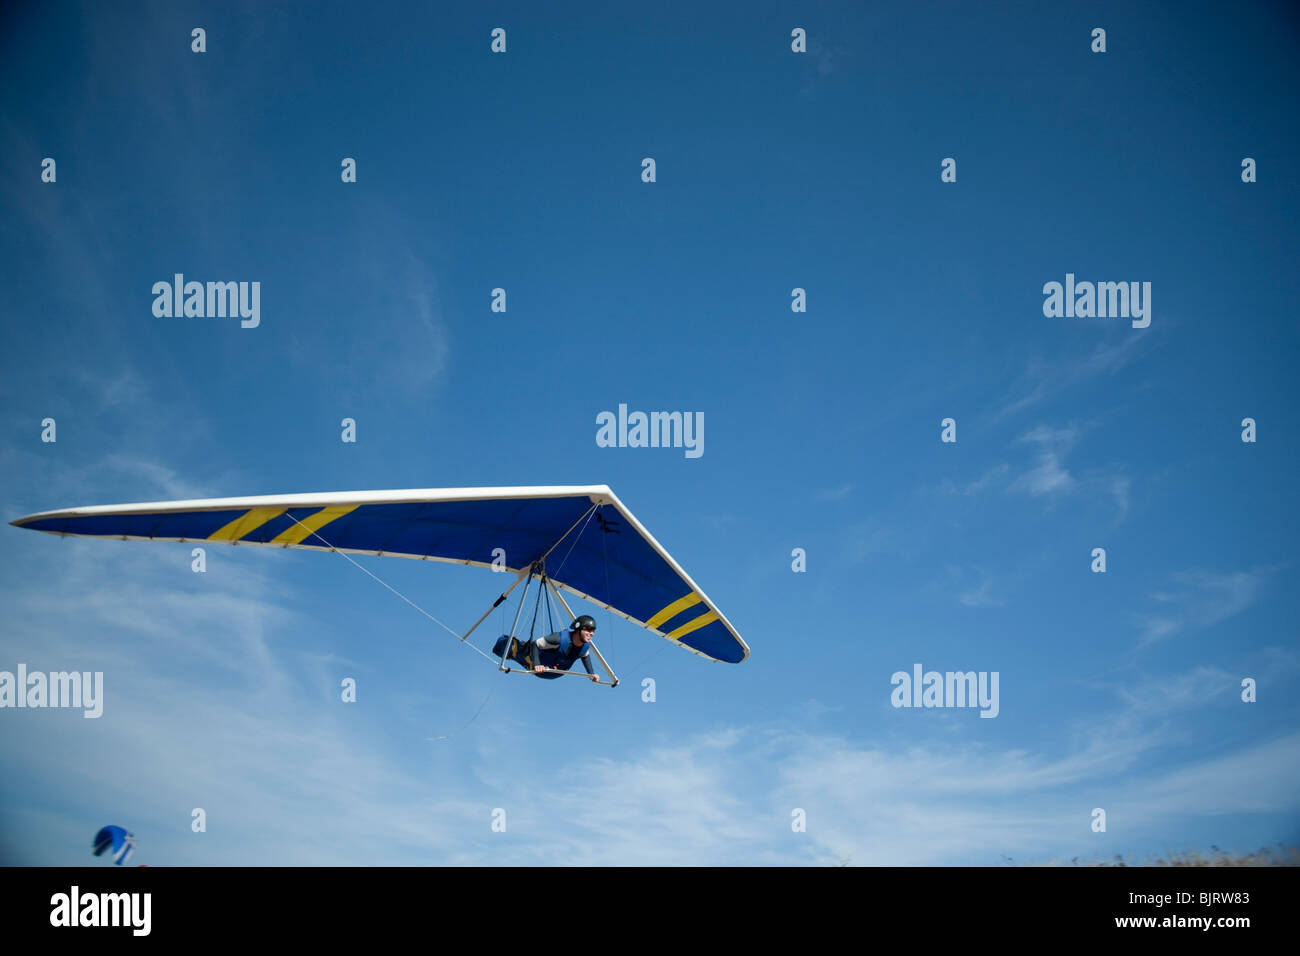 USA, Utah, Lehi, junger Mann Drachenfliegen, niedrigen Winkel Ansicht Stockfoto